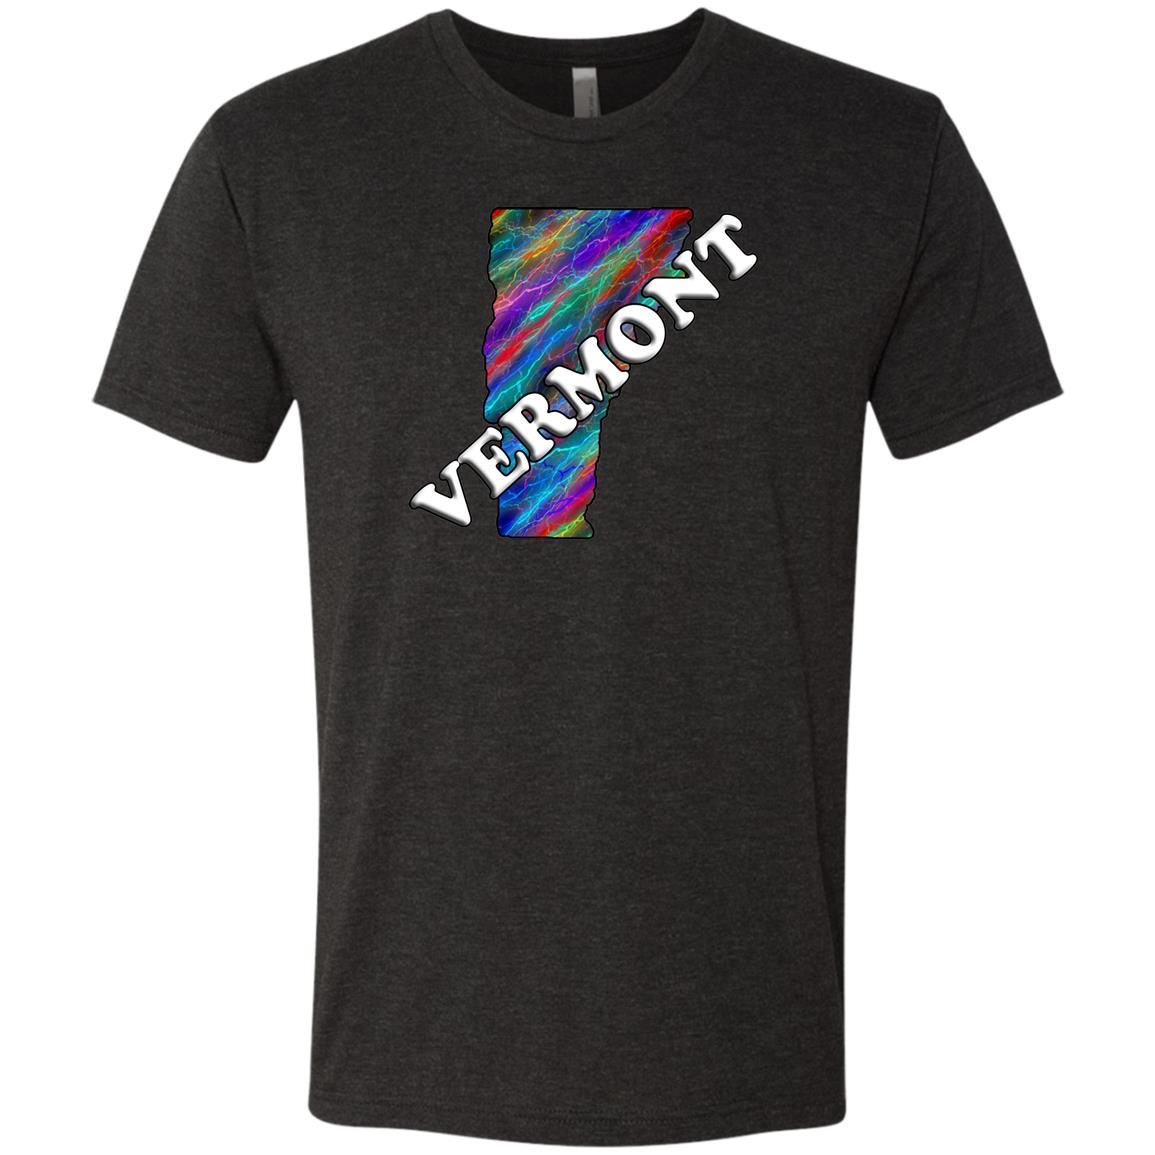 Vermont State T-Shirt